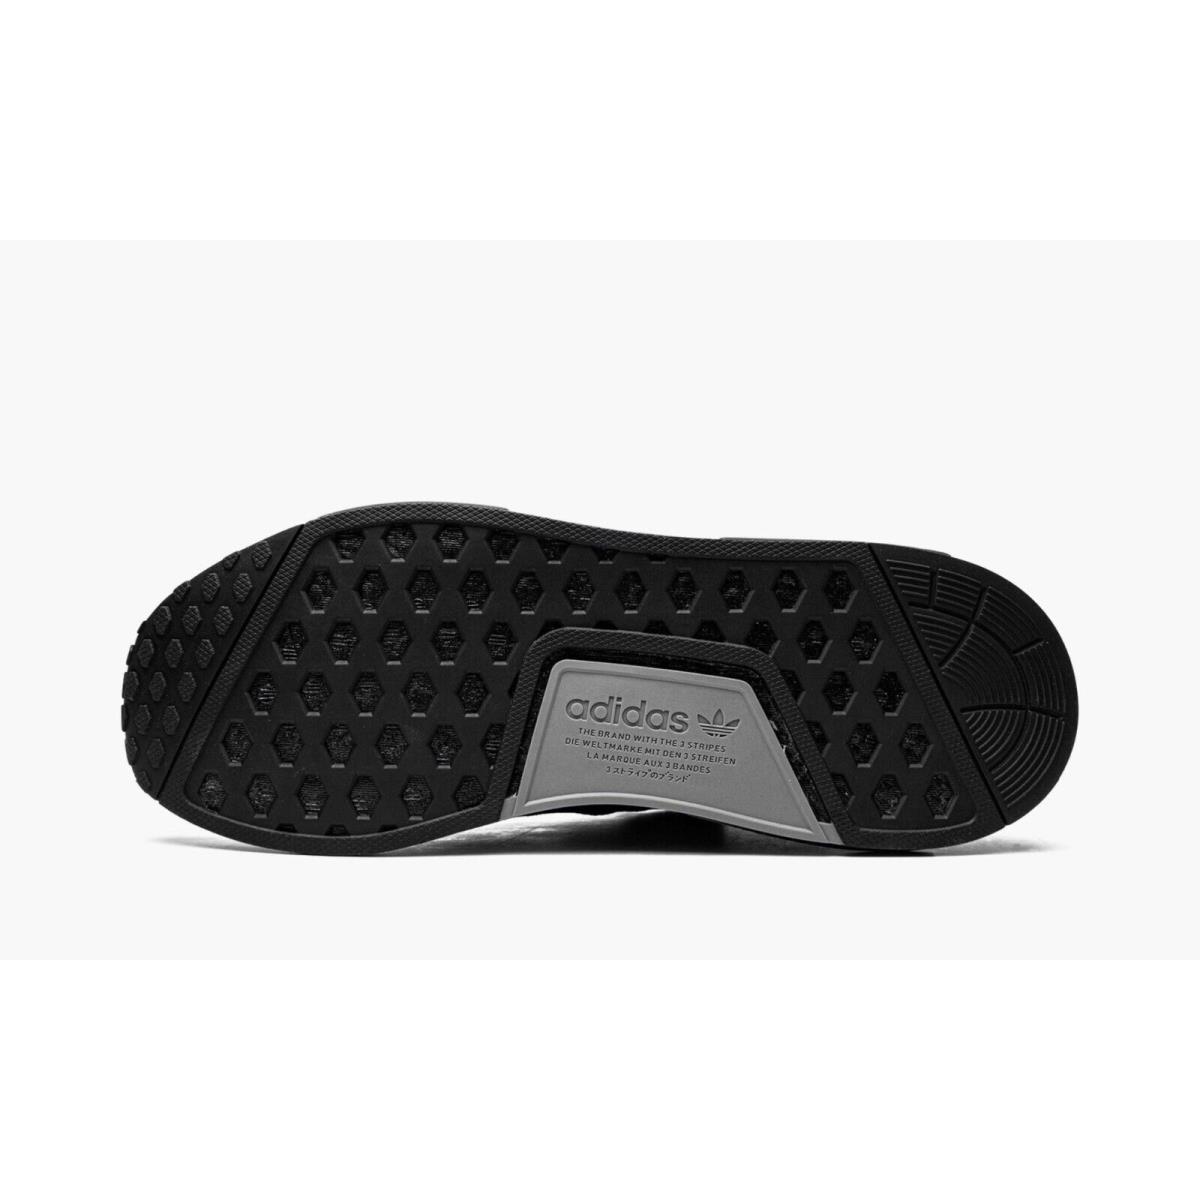 Adidas shoes NMD - Black 19